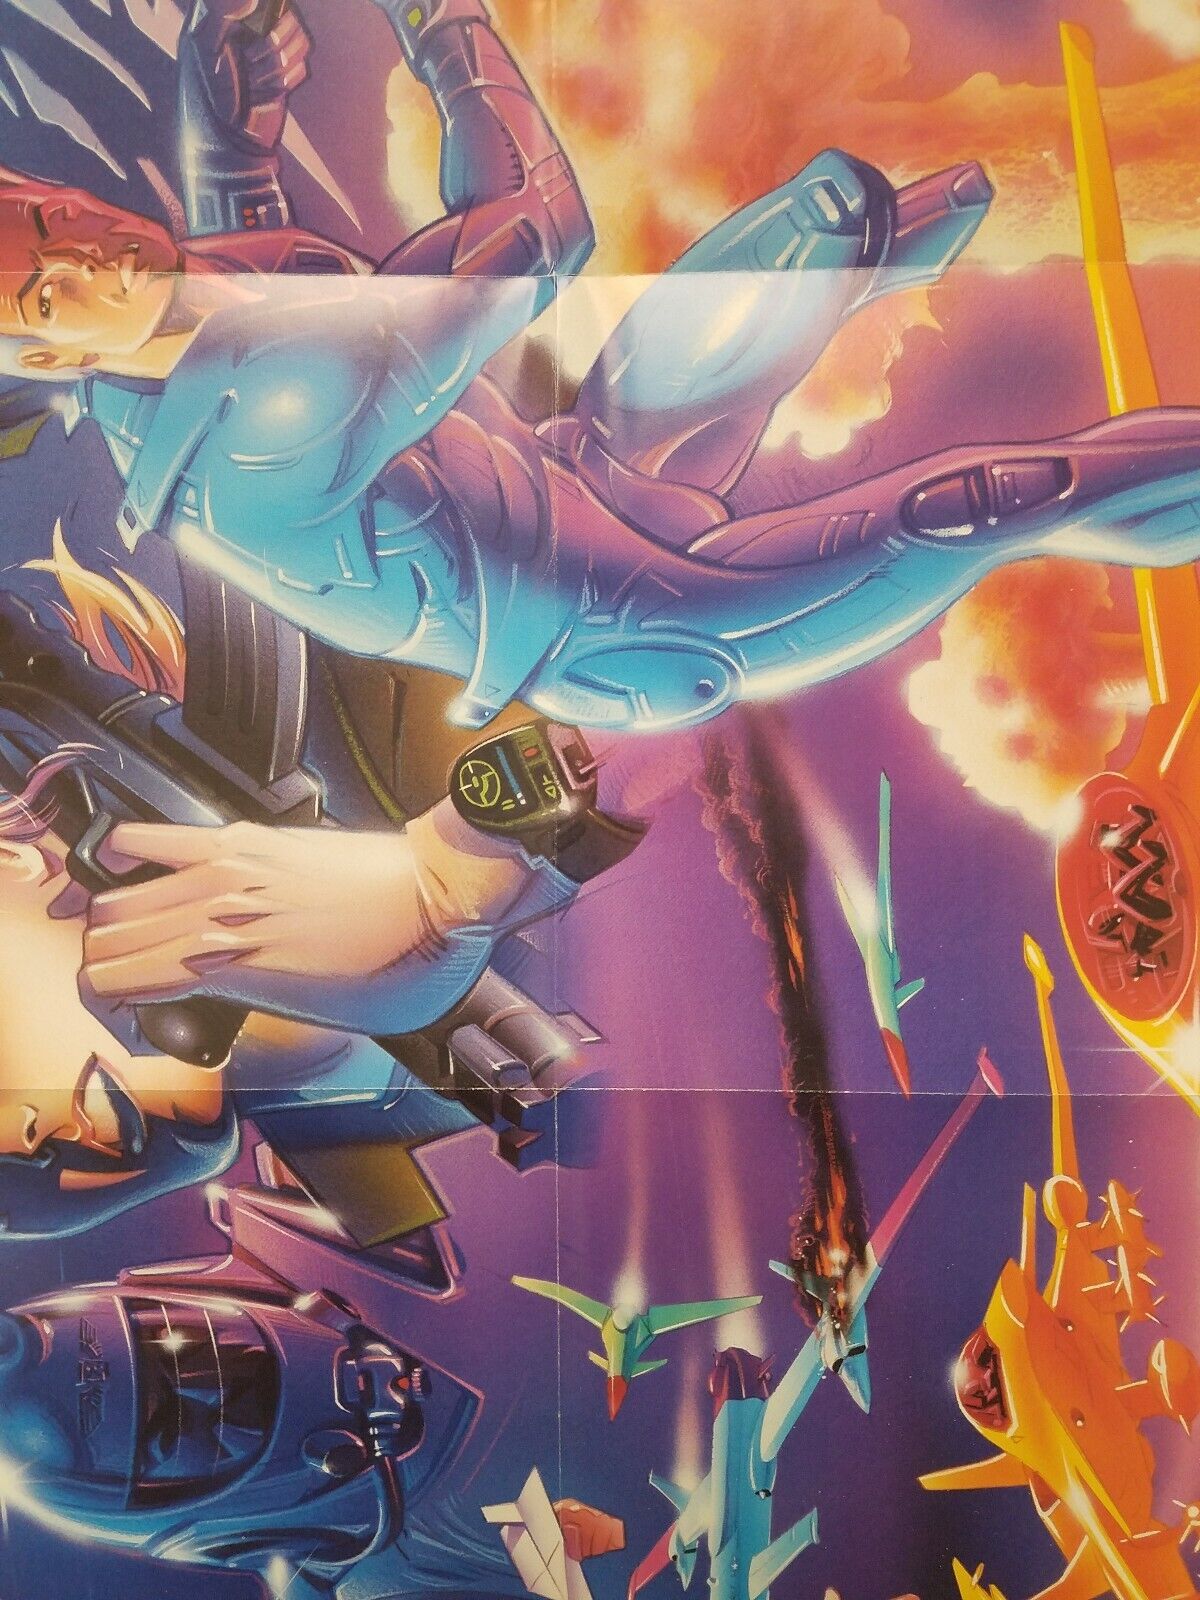 Tempest Fugitive (1990) Retailer Poster Ken Steacy Art DC Comics 22 X 35 Unused